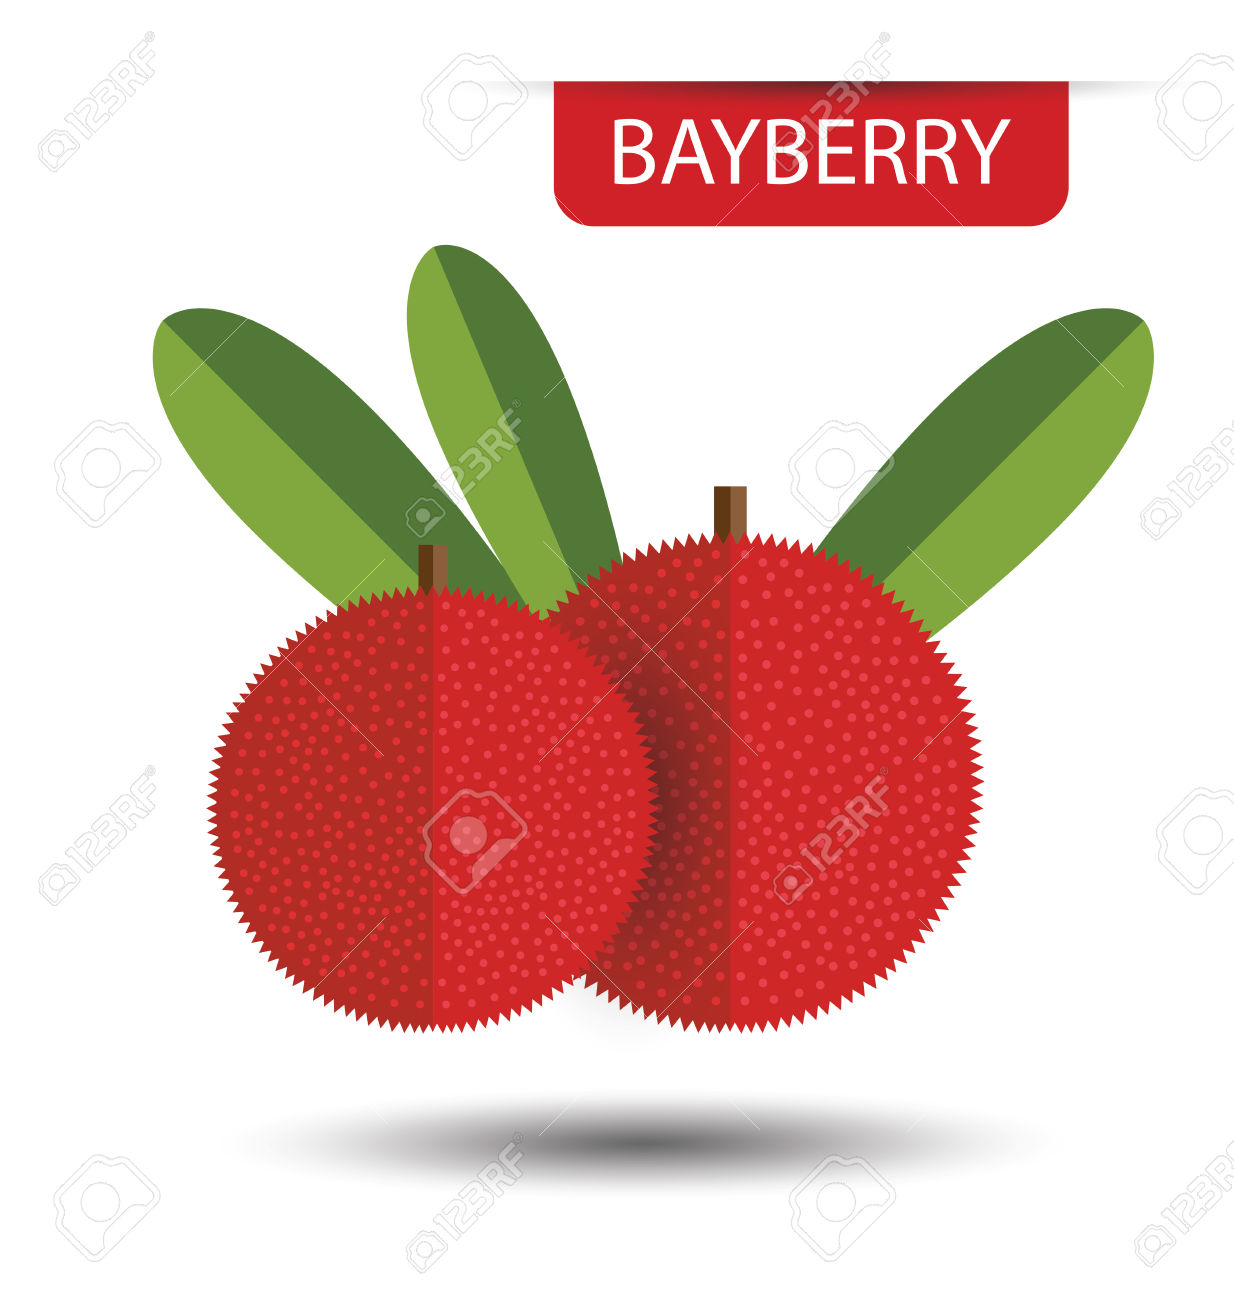 Bayberry Clip Art.